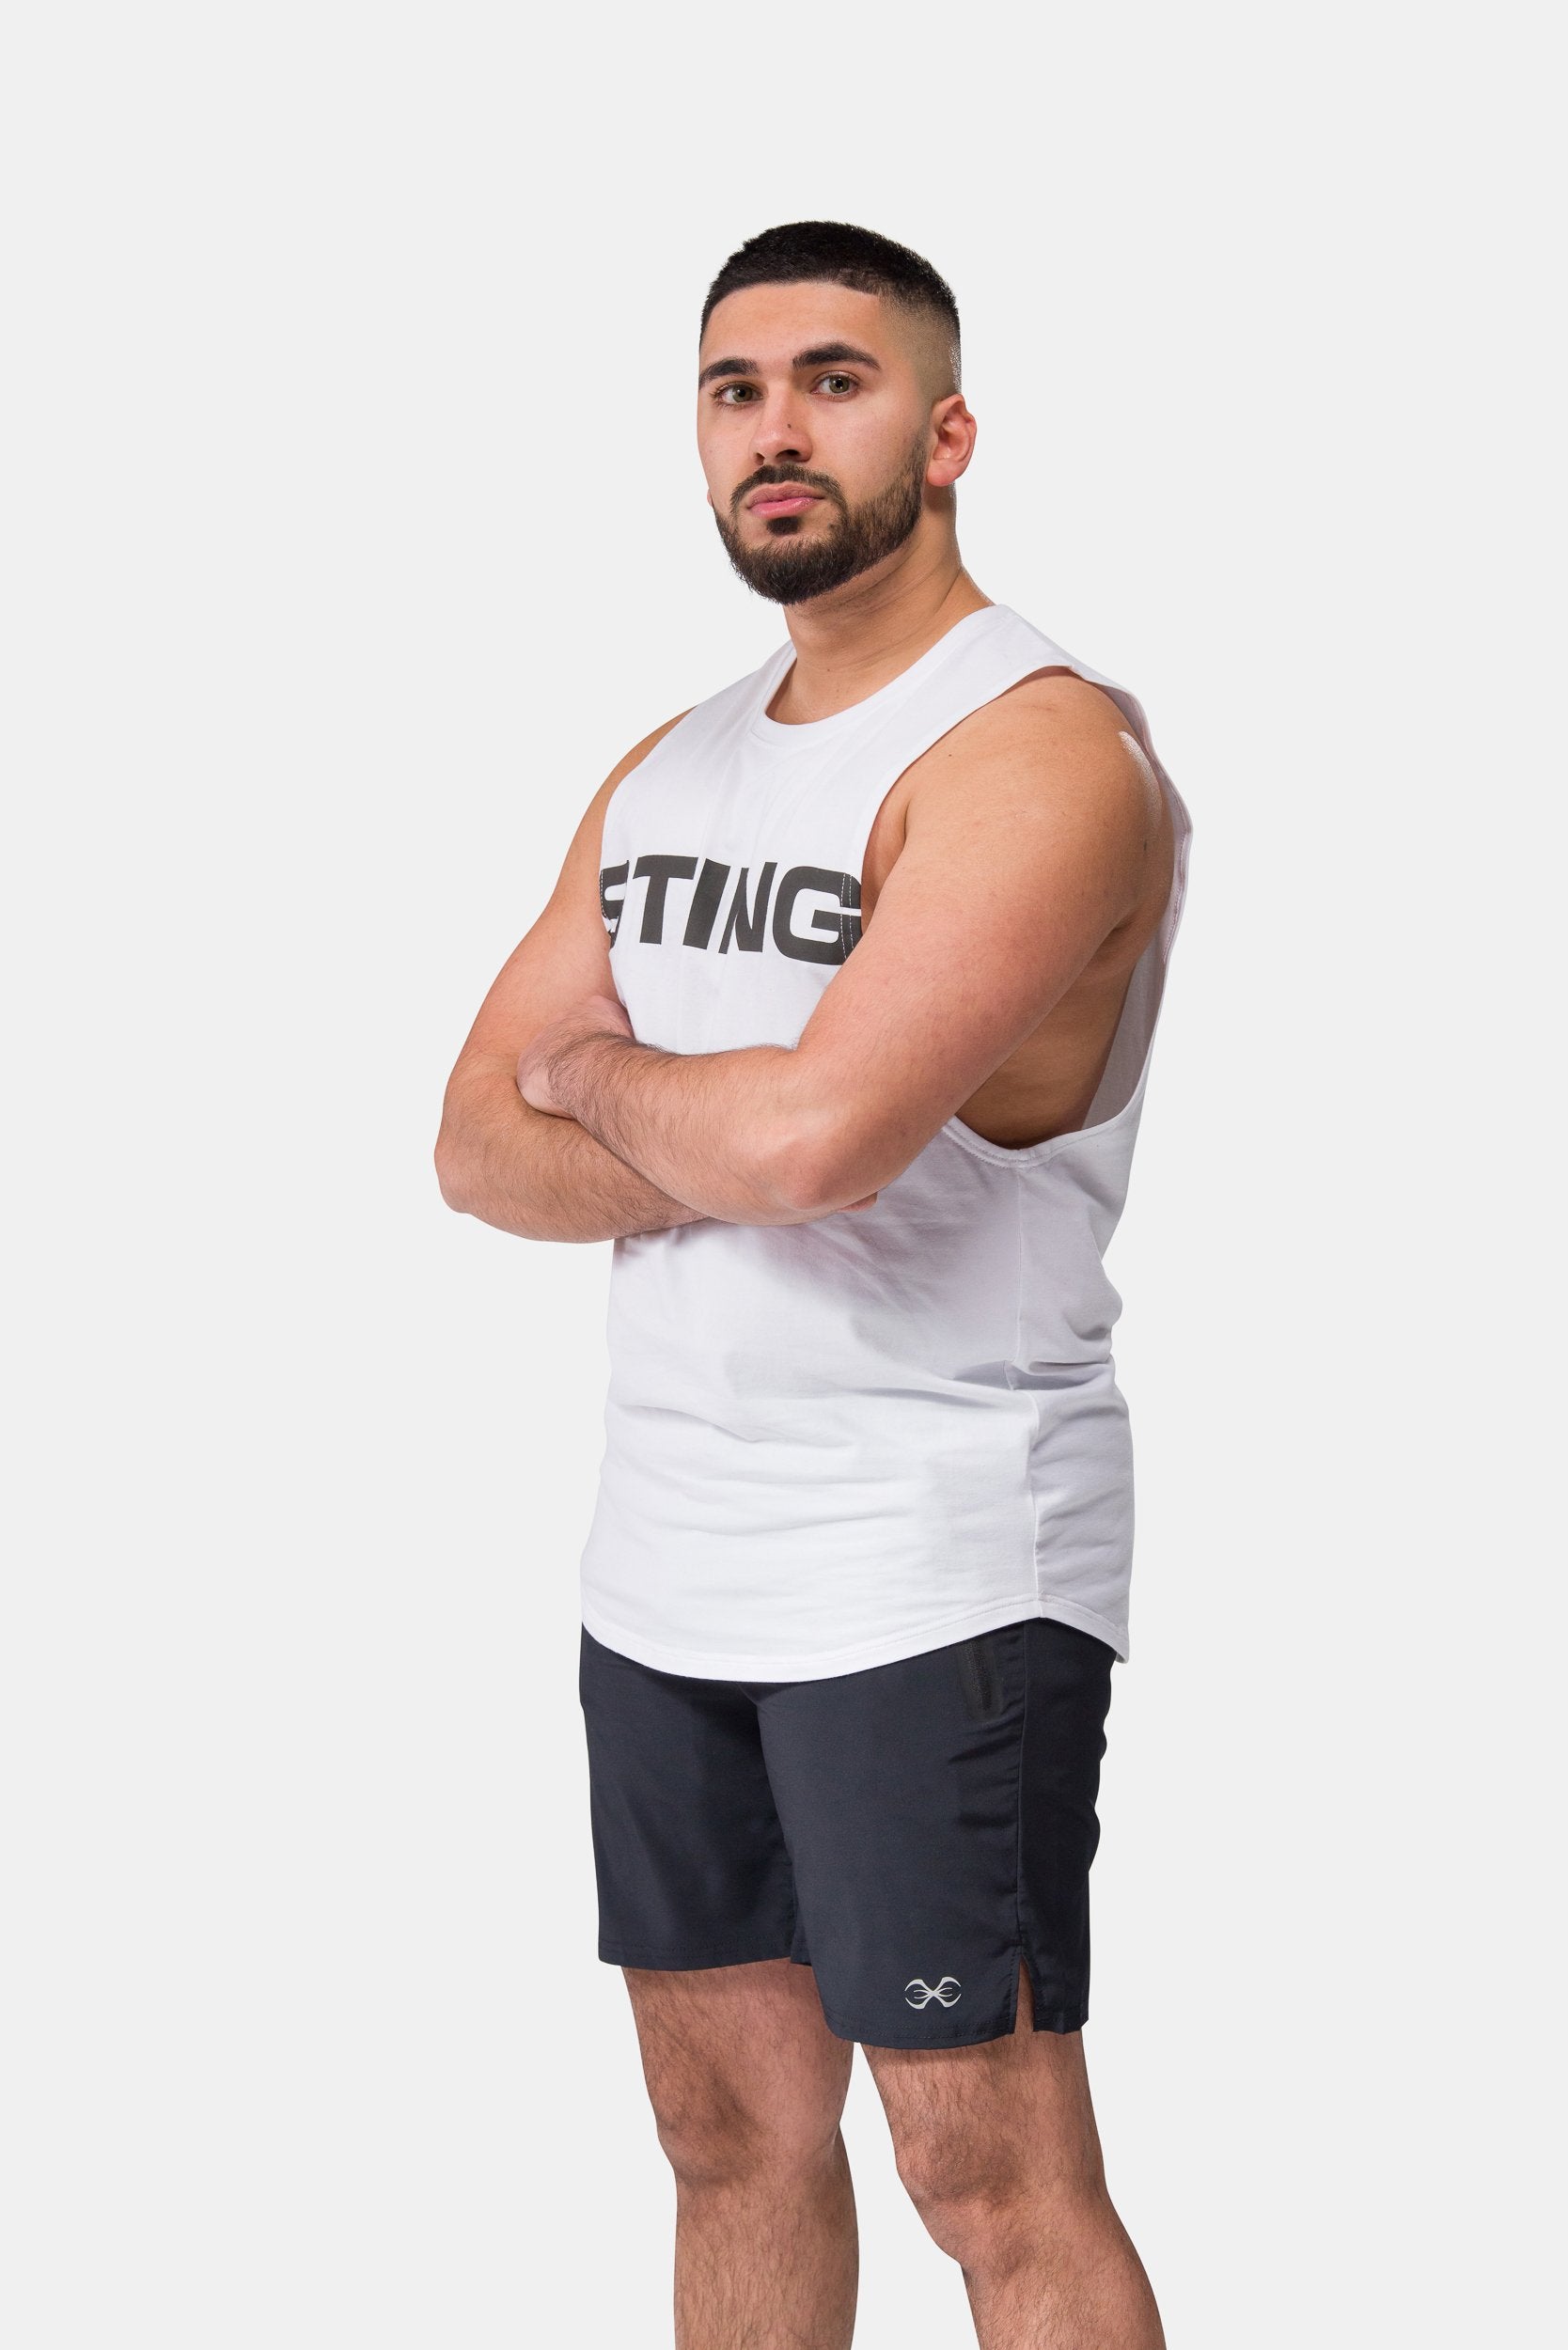 STING Mens Titan Muscle Singlet White